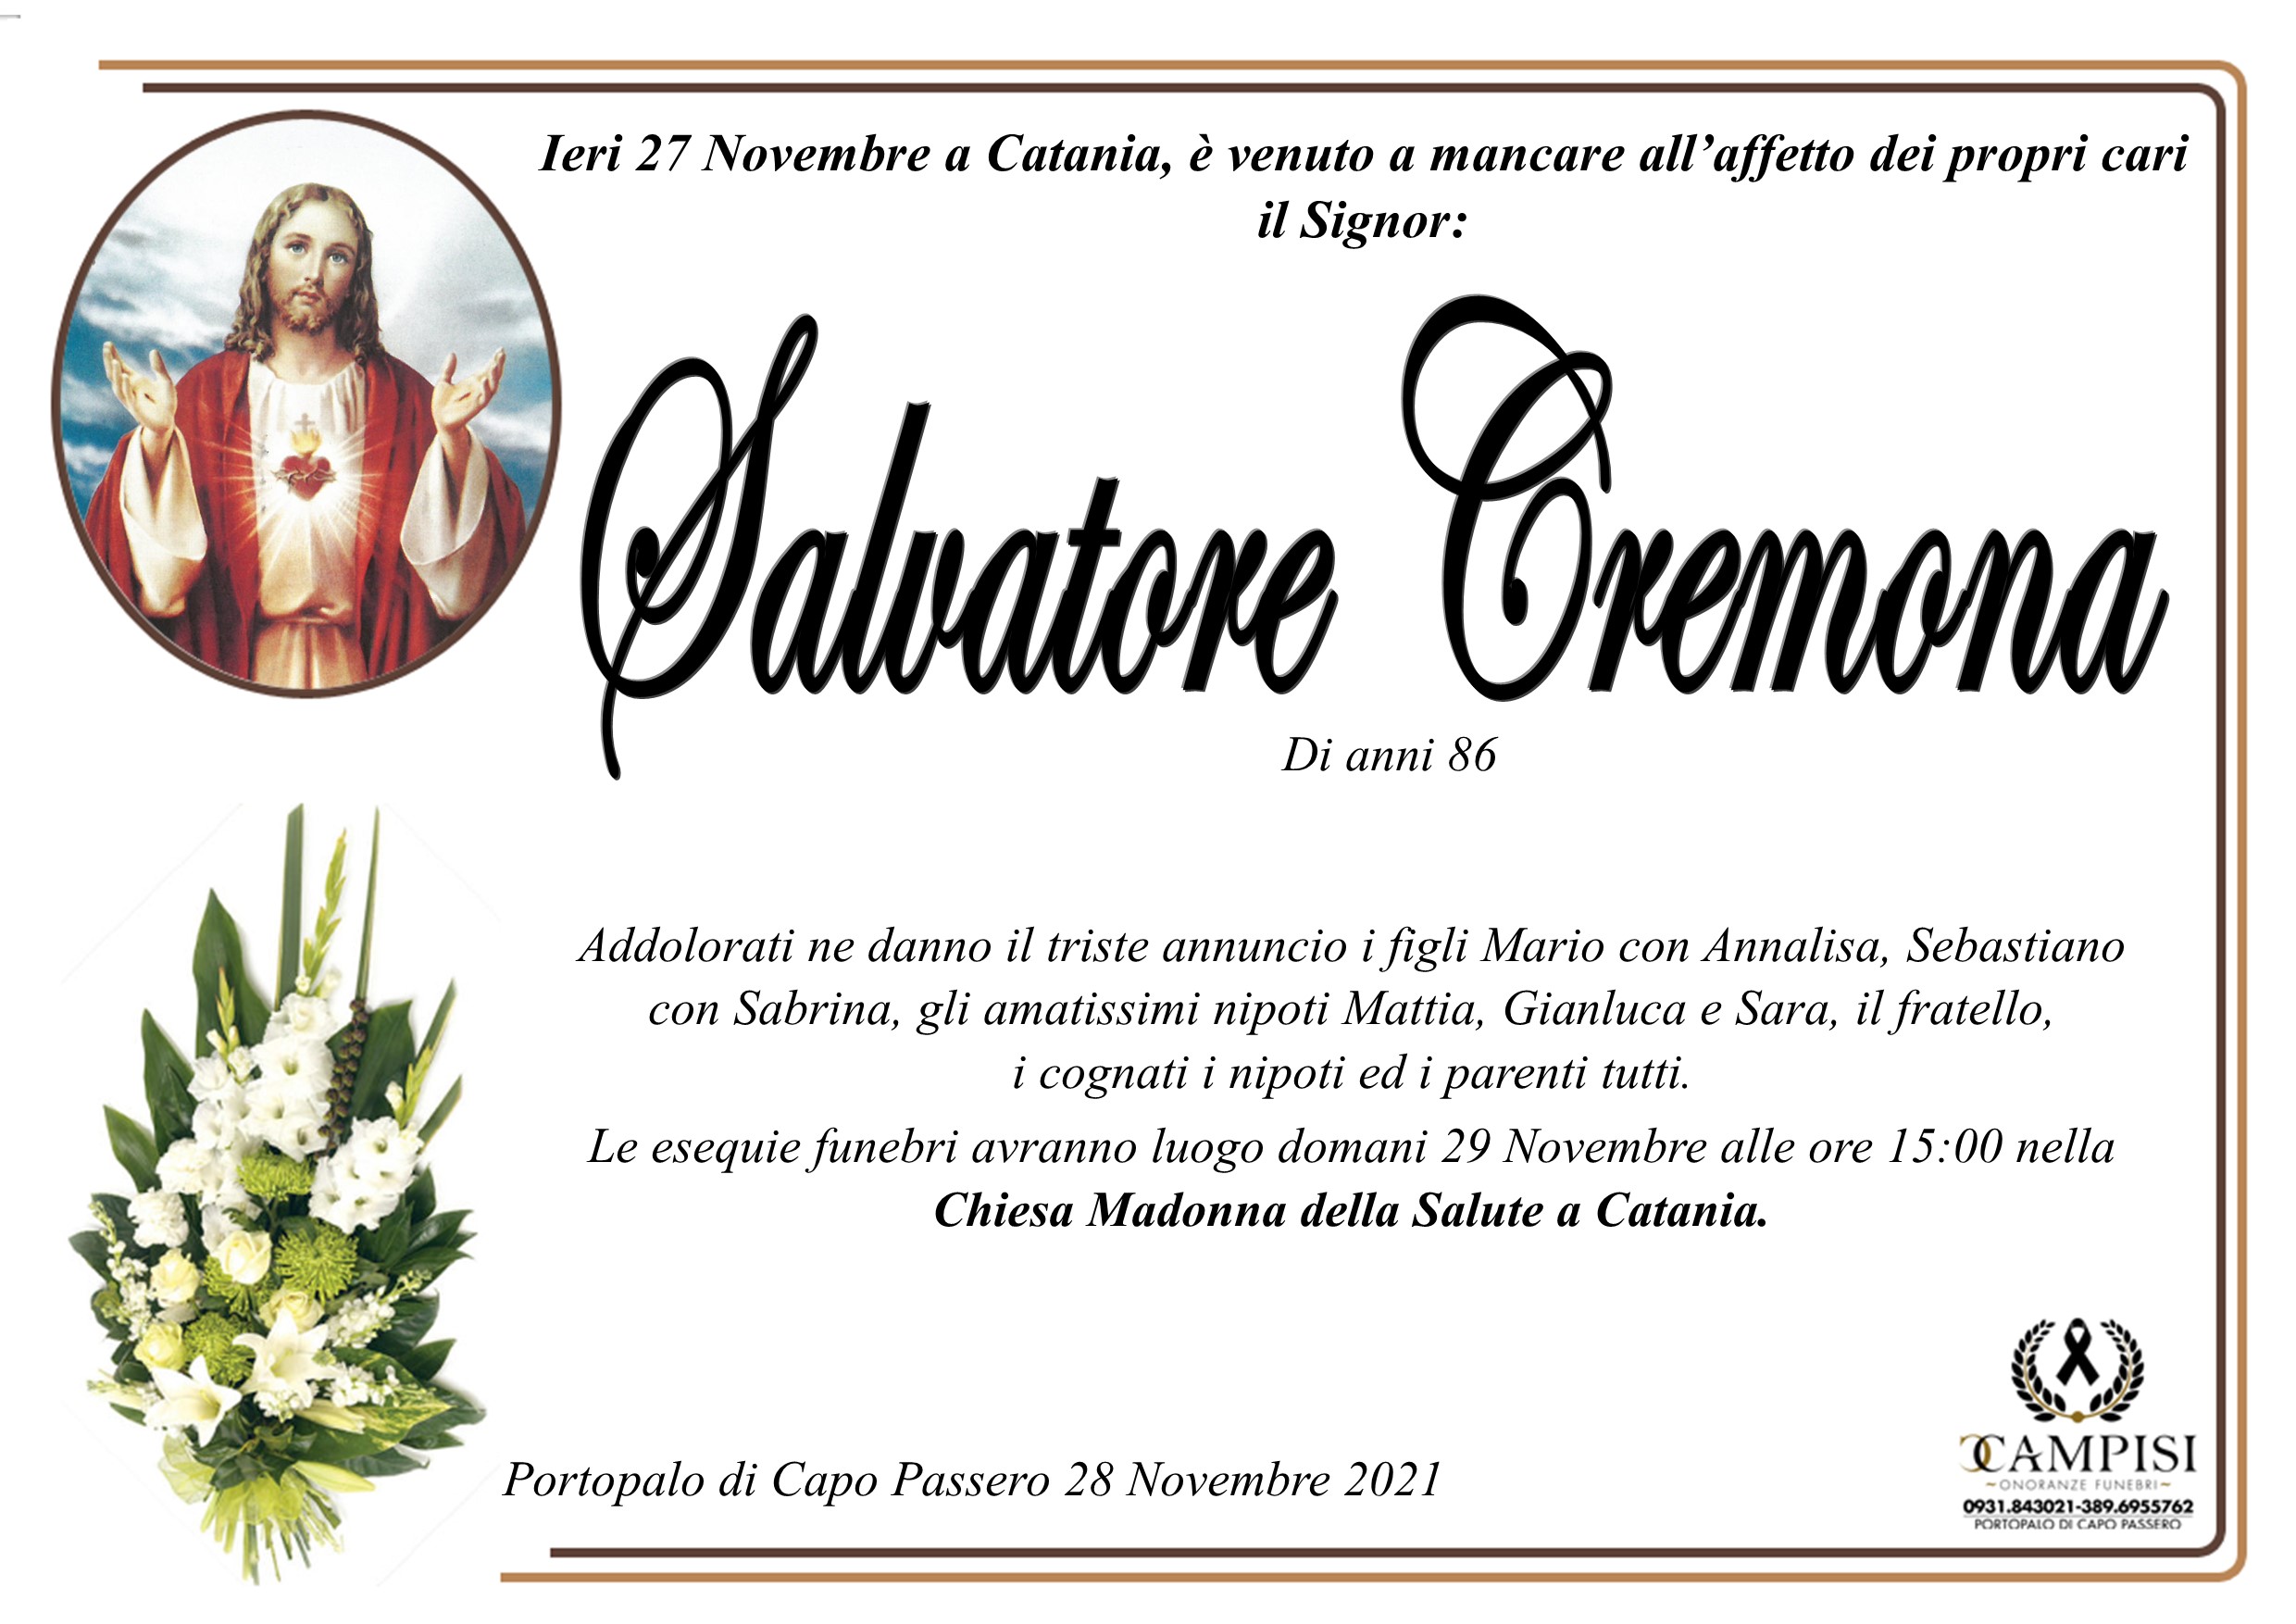 Salvatore Cremona